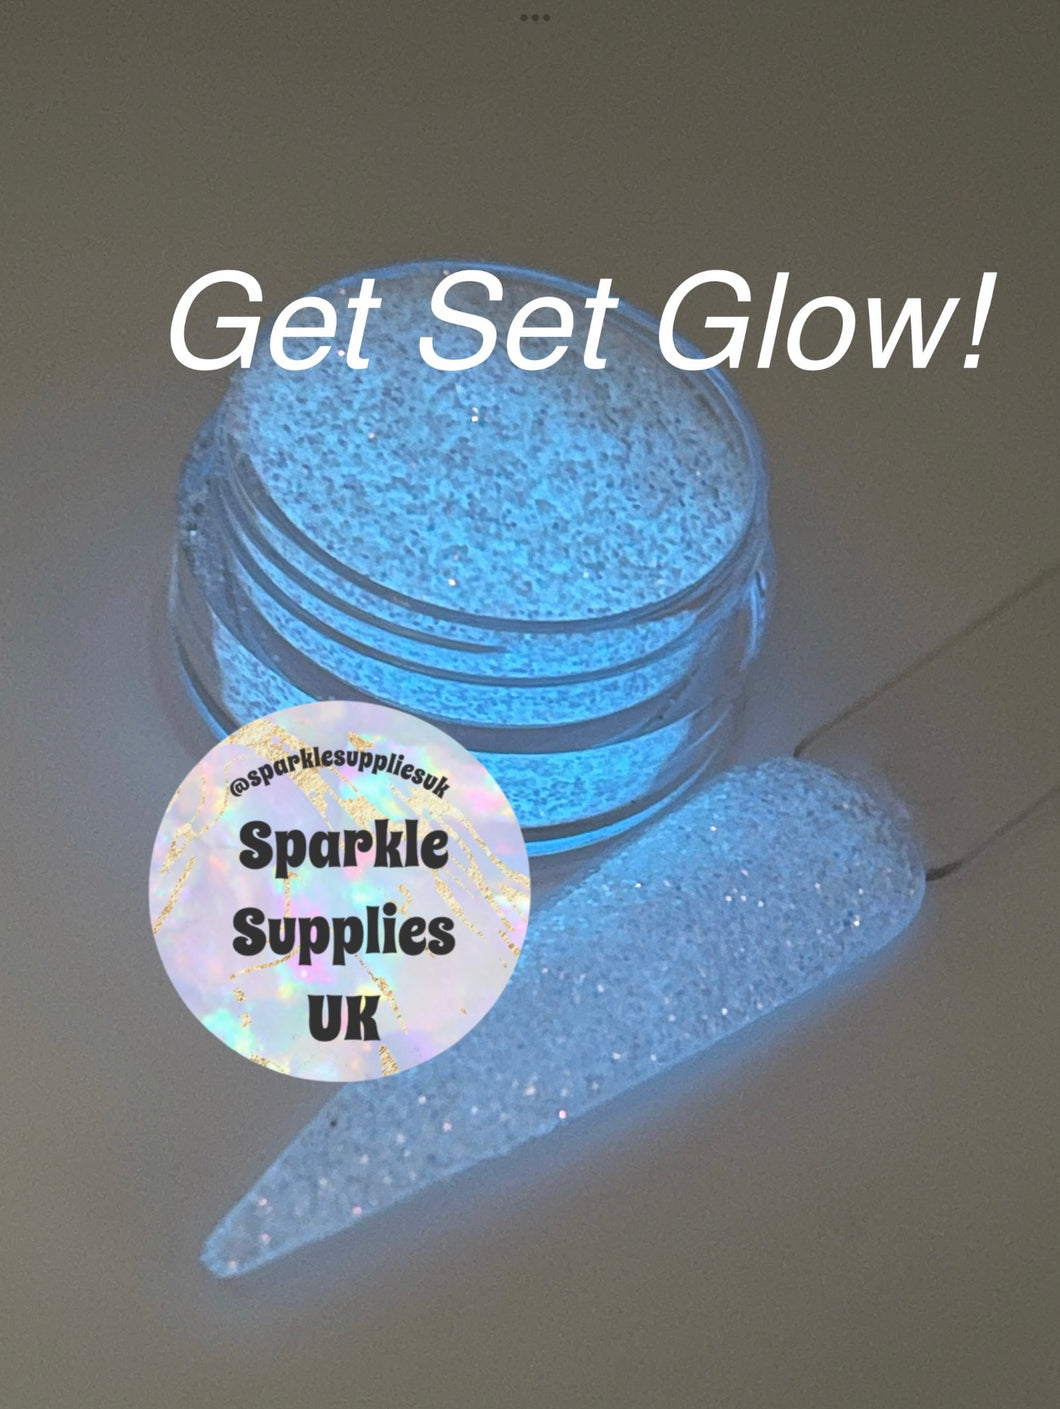 Get Set Glow!